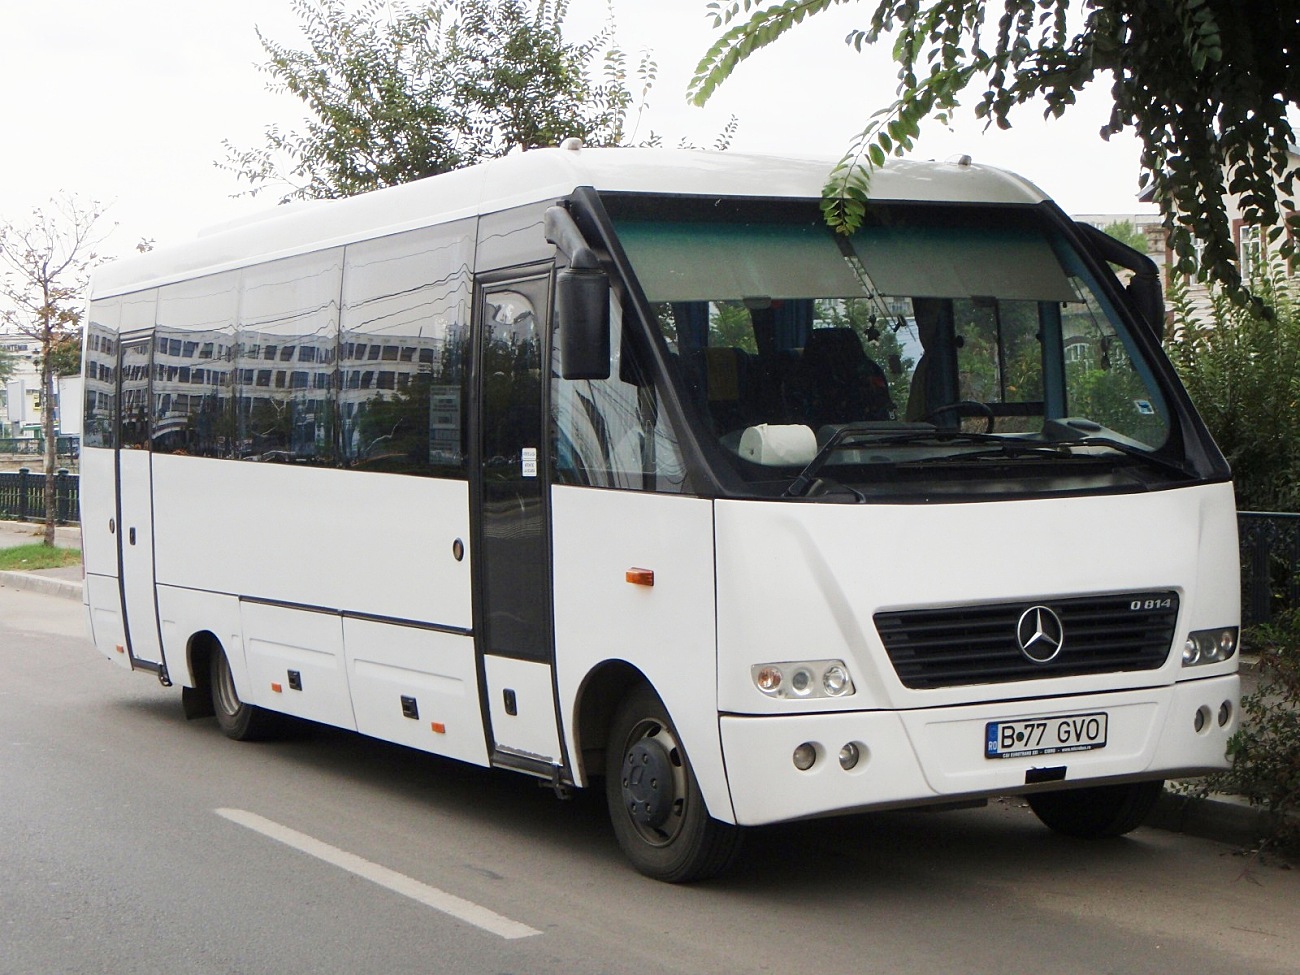 Mercedes-Benz 814 D / Eurotrans XXI Cibro #B 77 GVO